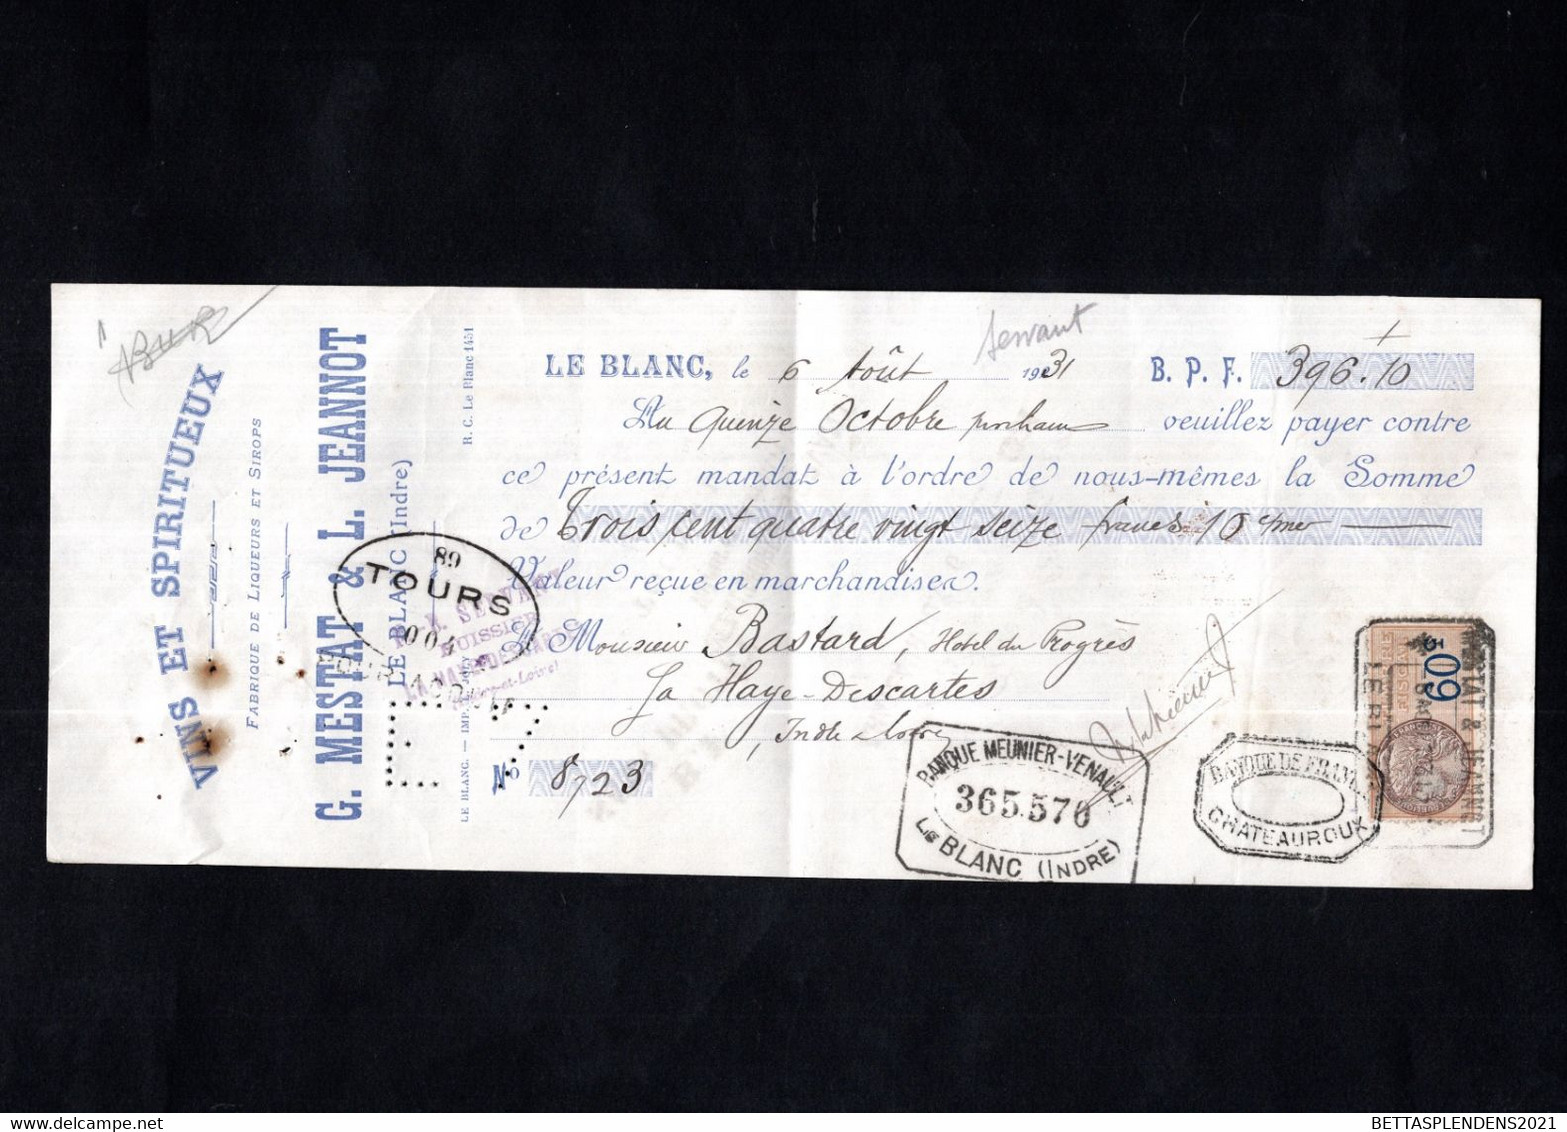 LE BLANC (Indre) - Lettre De Change 1931 -Vins Et Spiritueux - G. MESTAT & L. JEANNOT - Bills Of Exchange